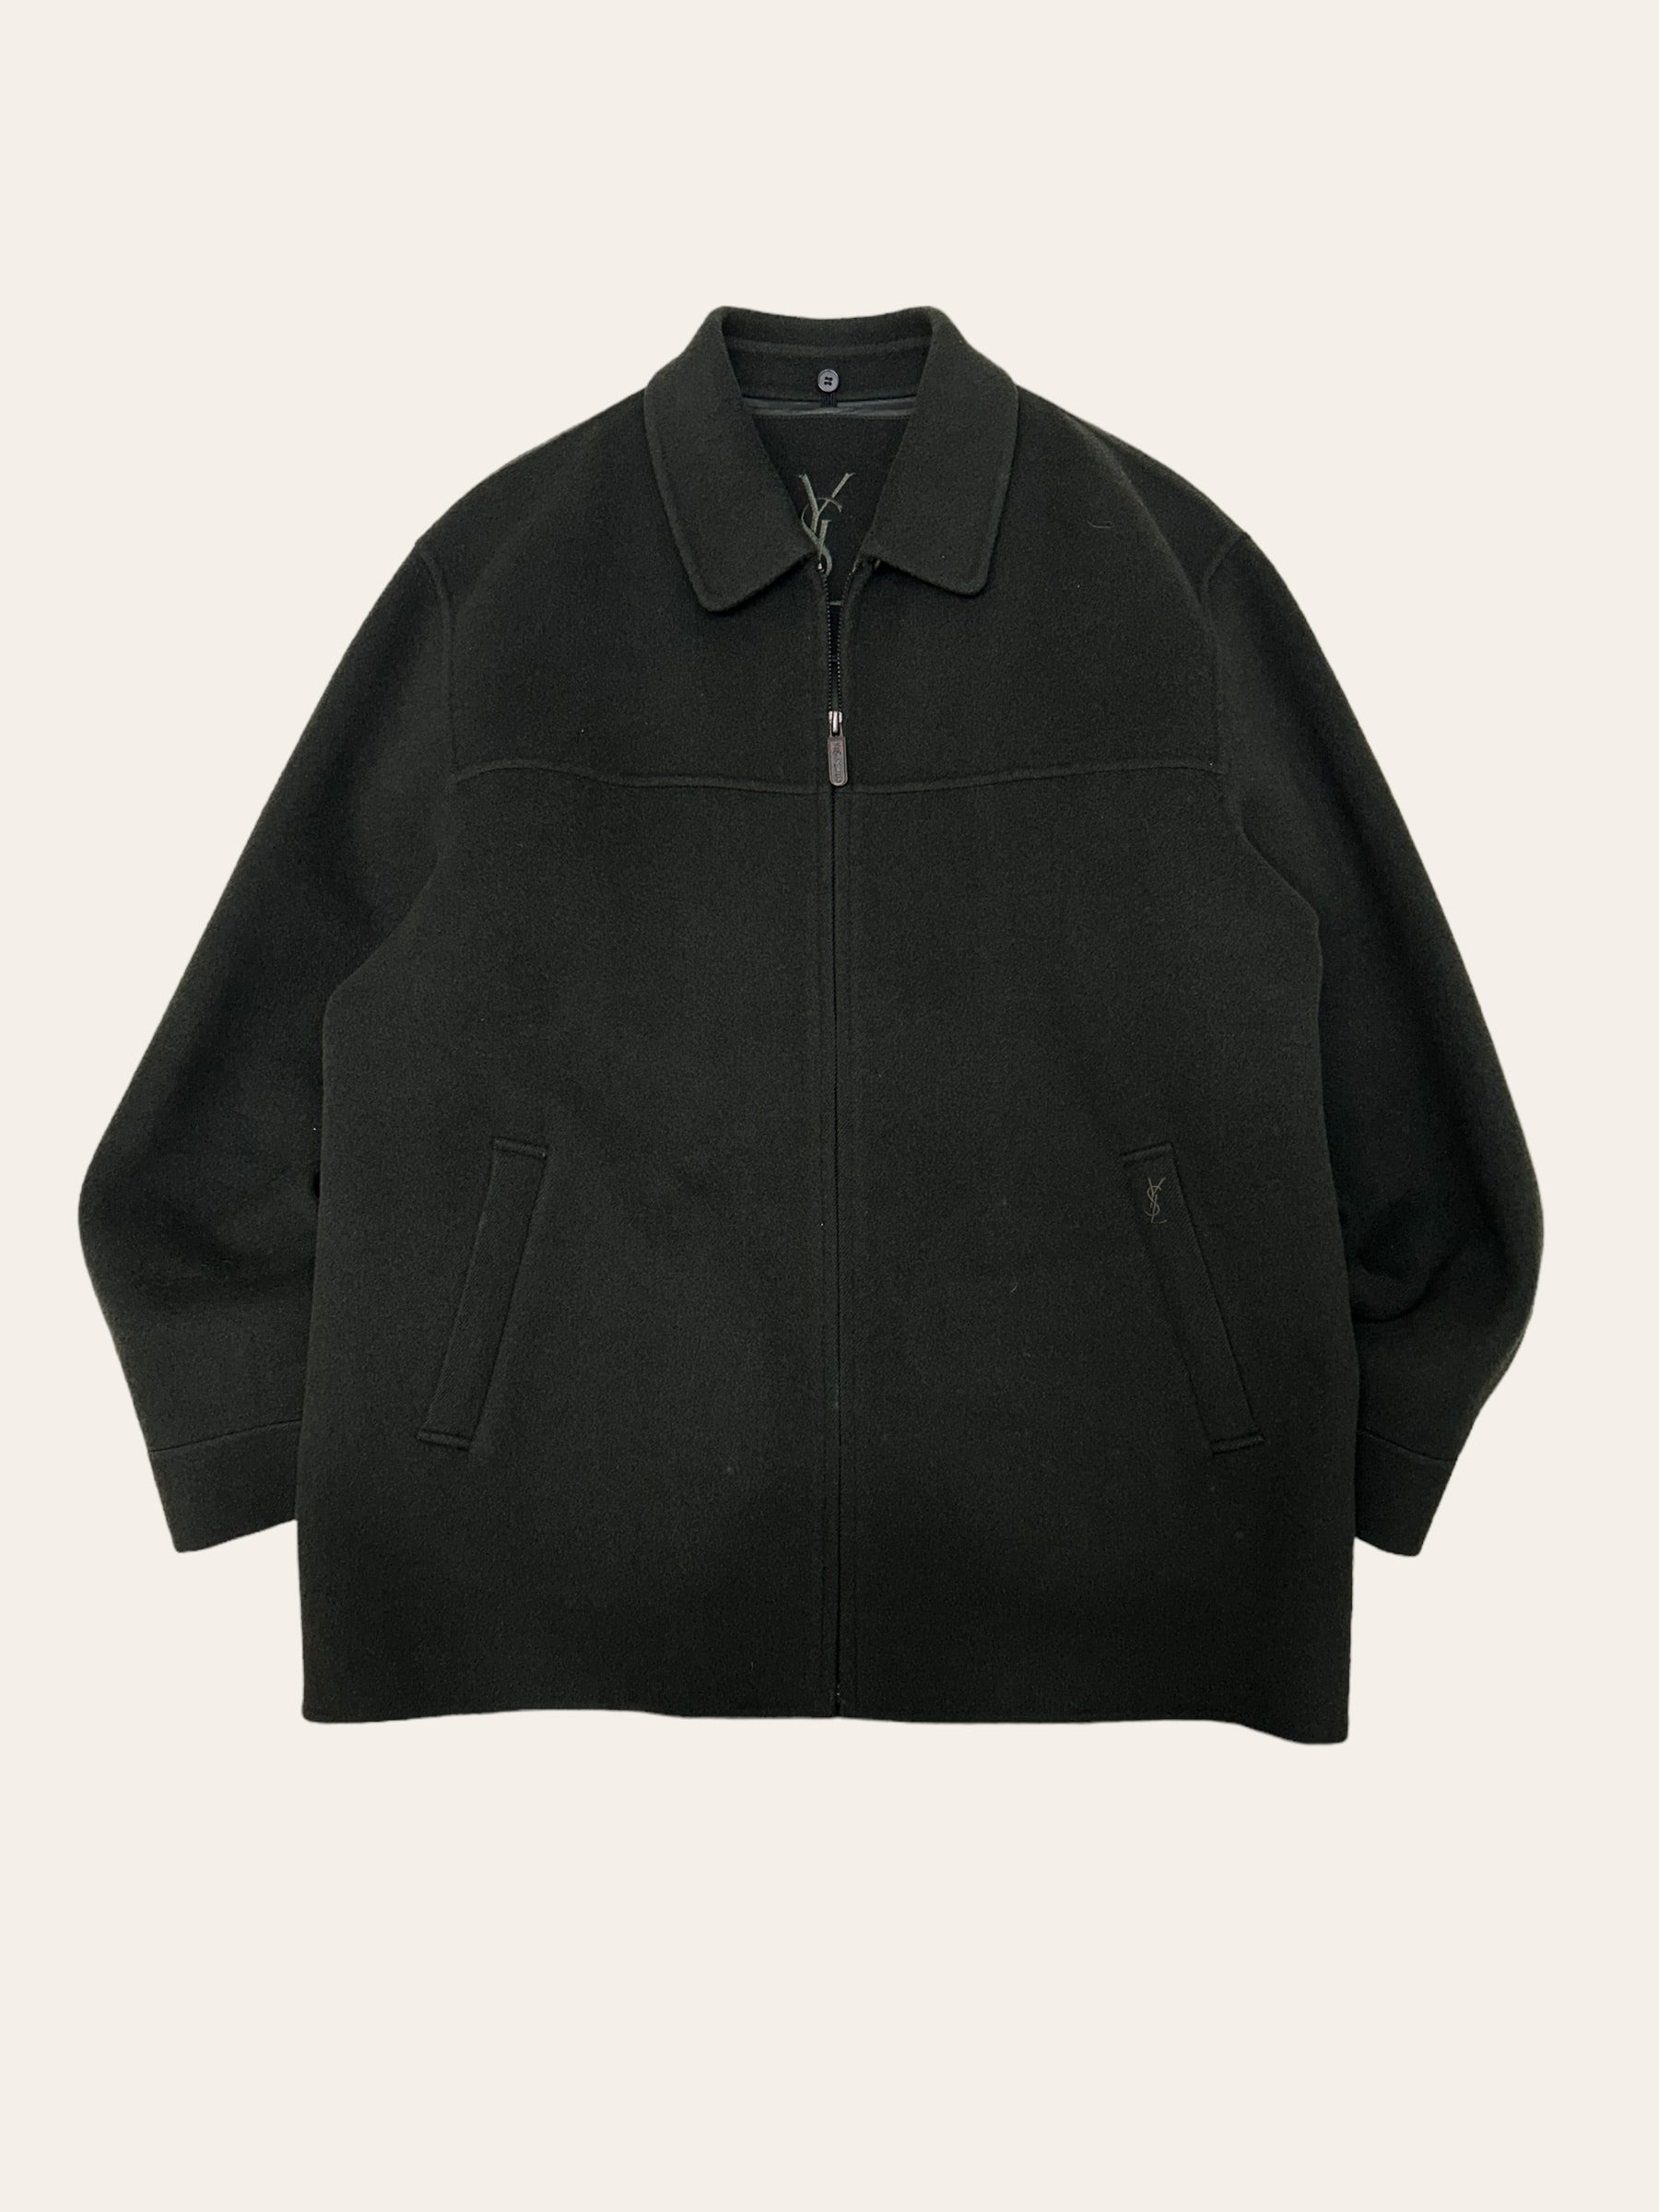 YSL khaki color wool blouson jacket 100